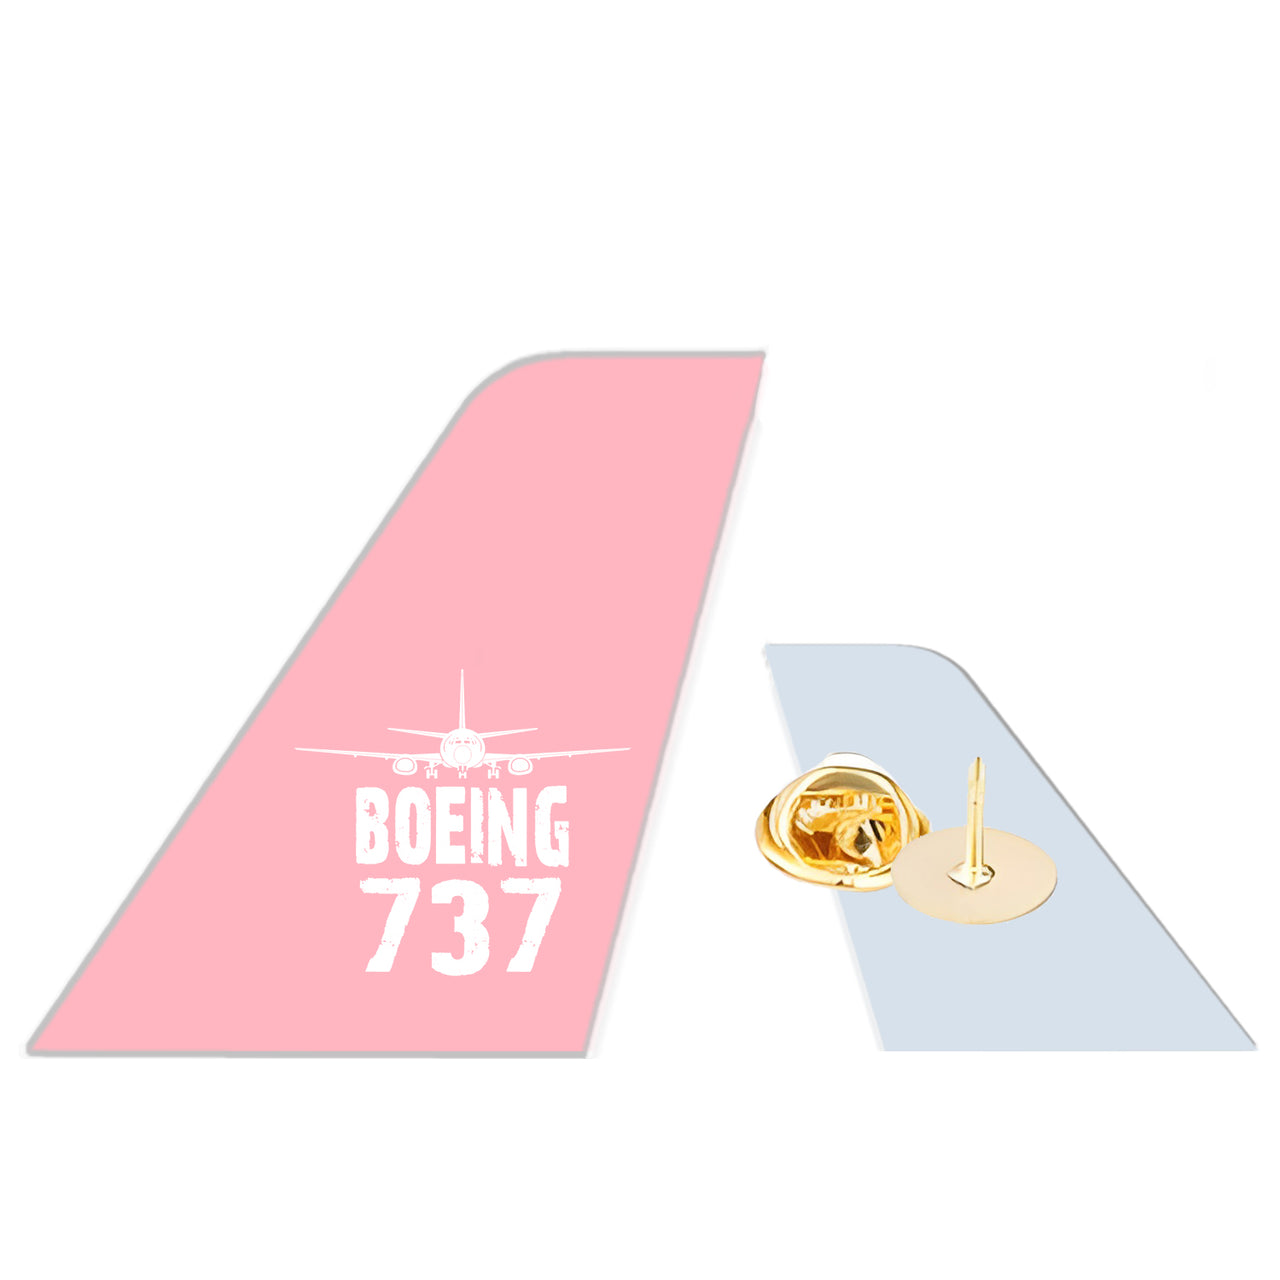 Boeing 737 & Plane Designed Tail Shape Badges & Pins